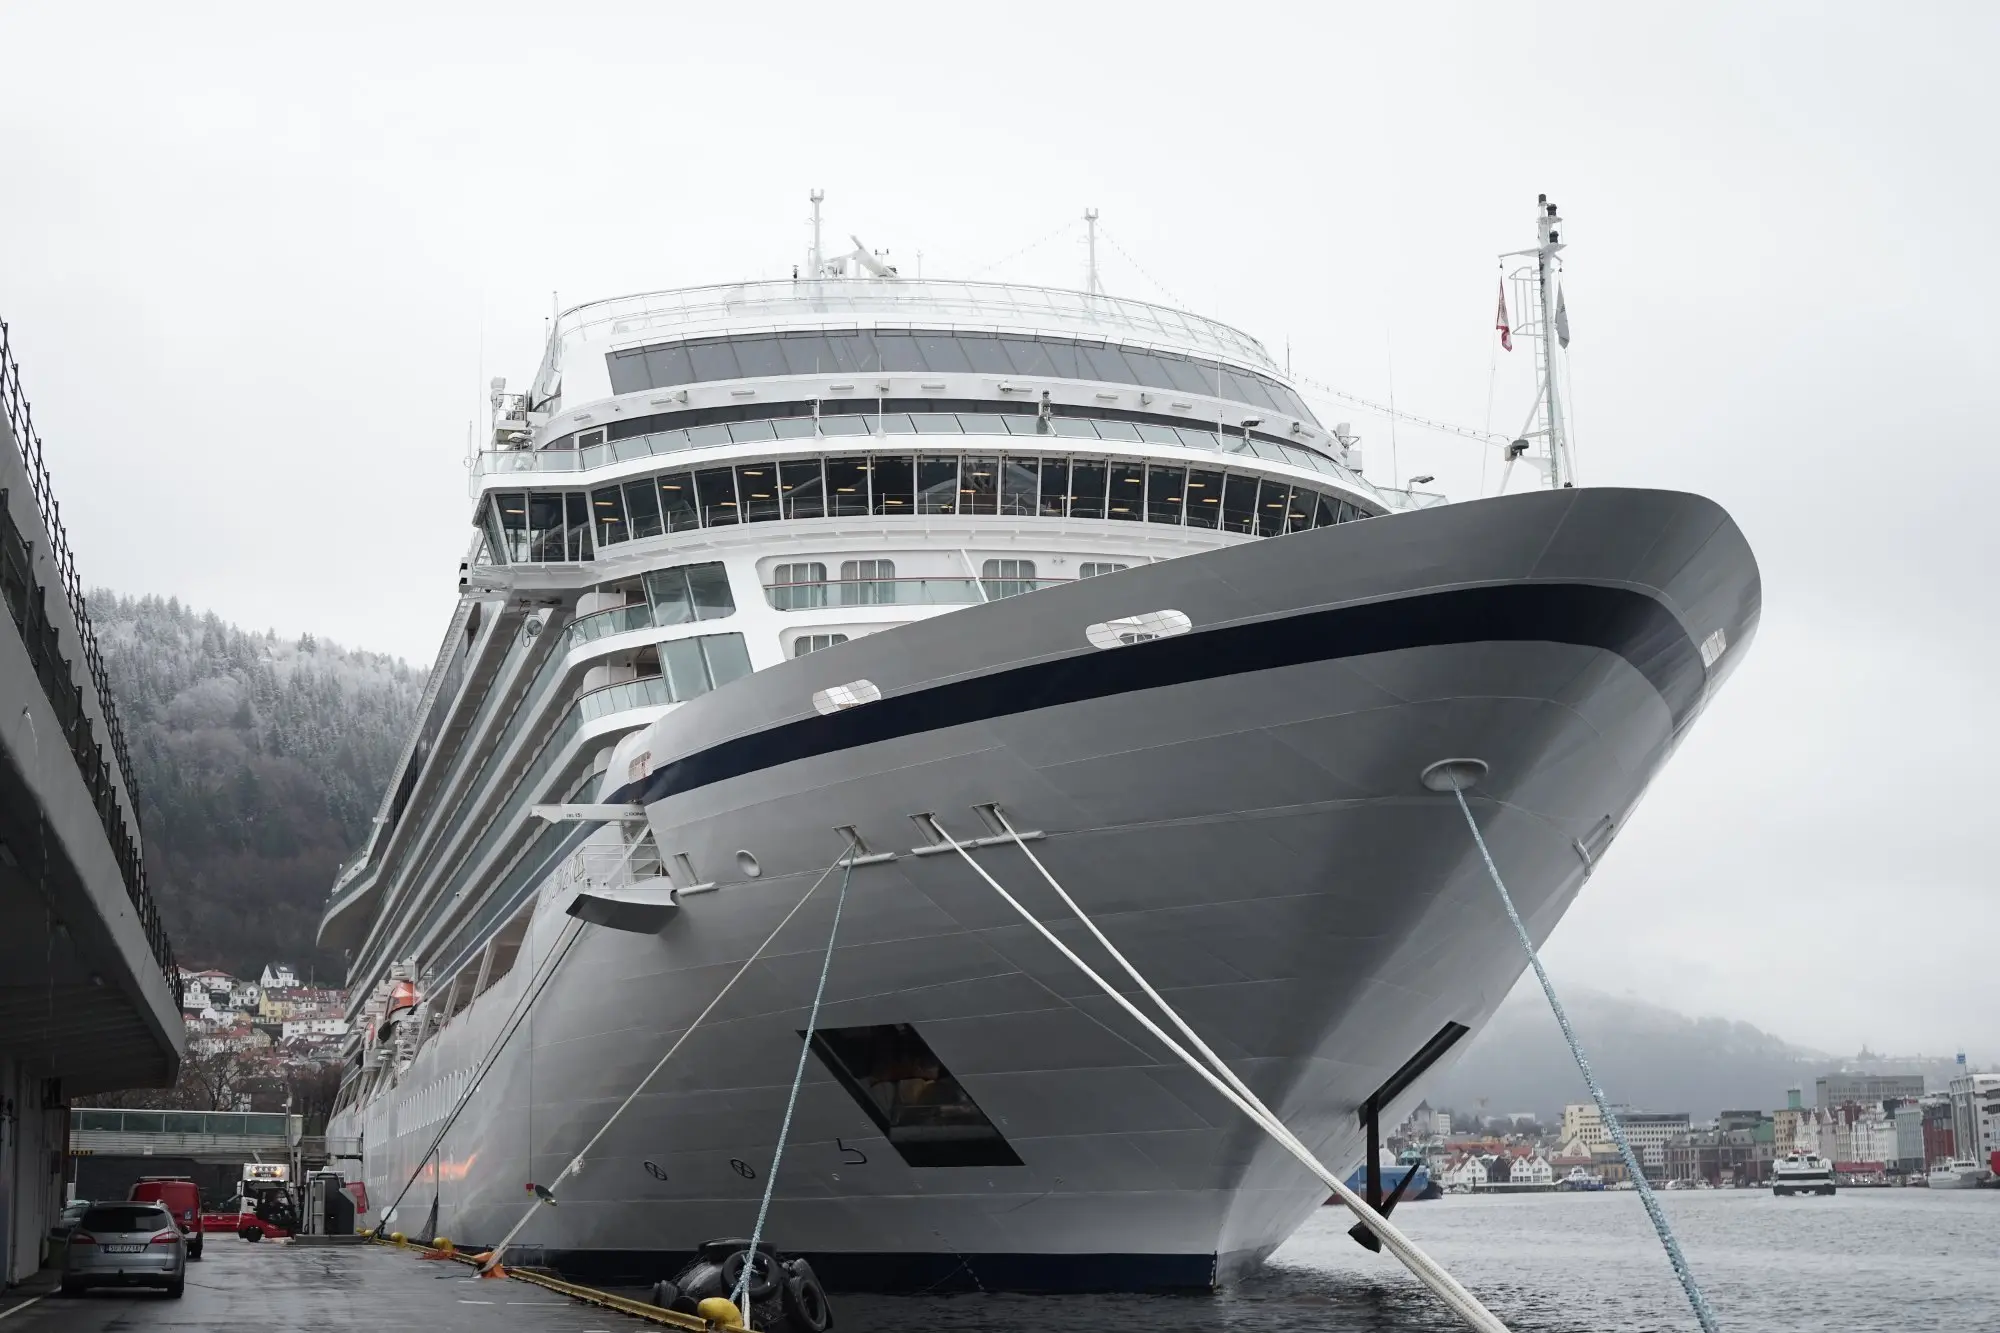 Cruiseship in port